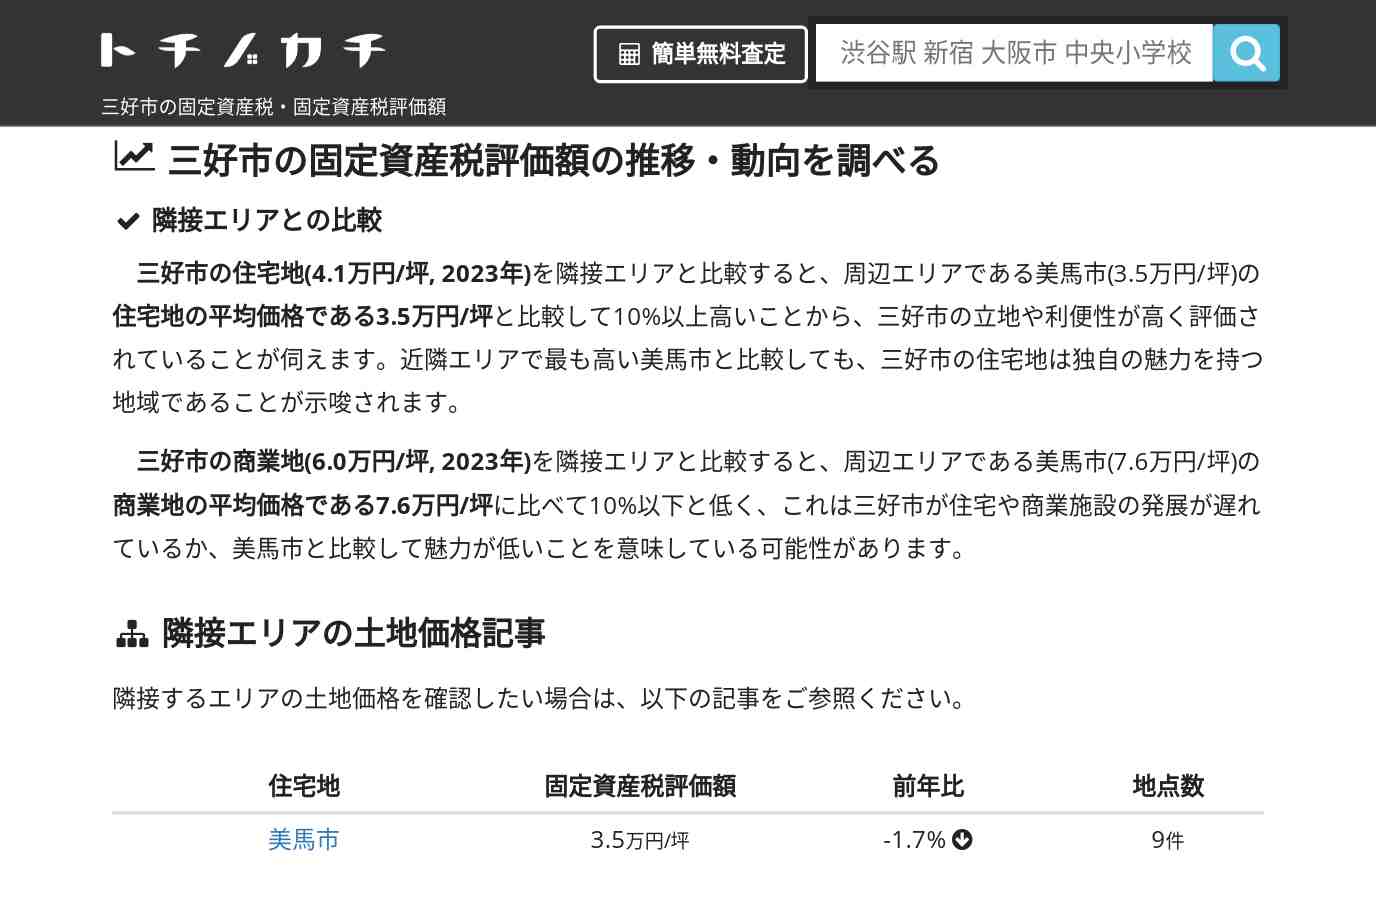 大和小学校(徳島県 三好市)周辺の固定資産税・固定資産税評価額 | トチノカチ